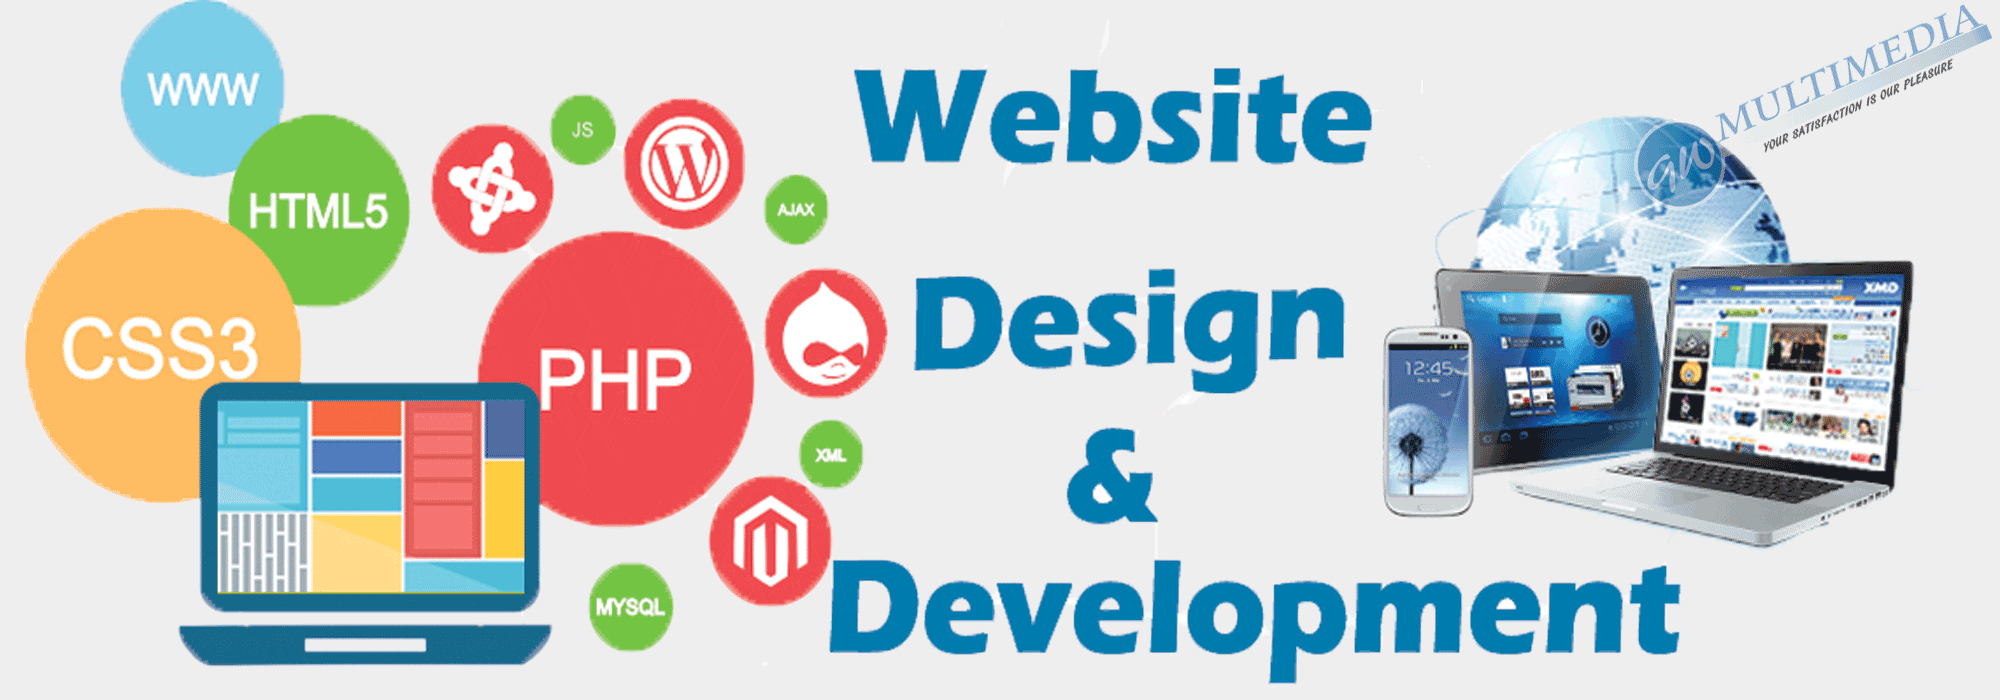 Web Design & development